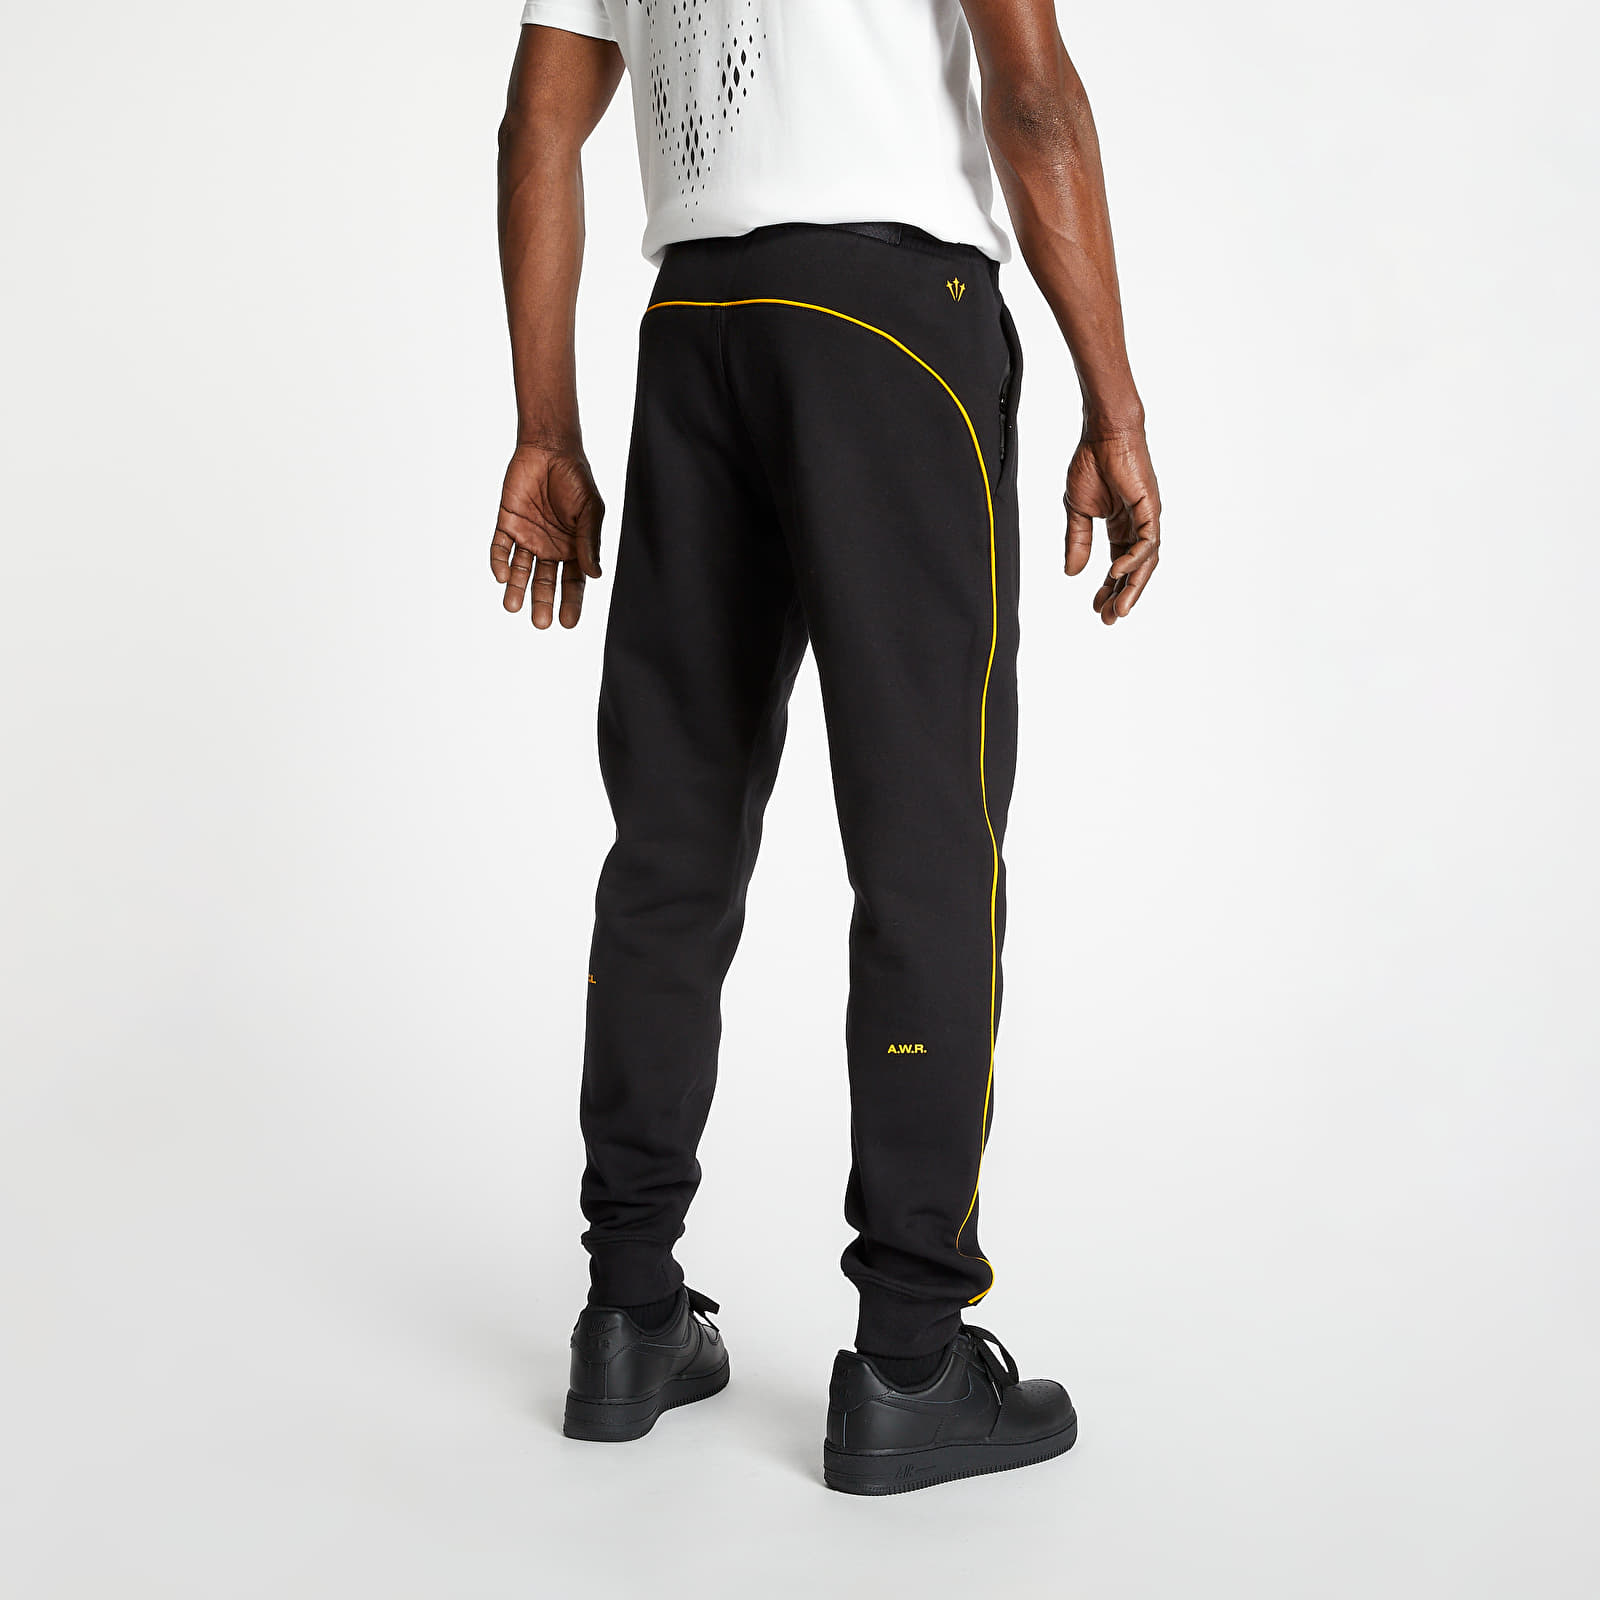 Nike x Nocta Trousers – A Fonte